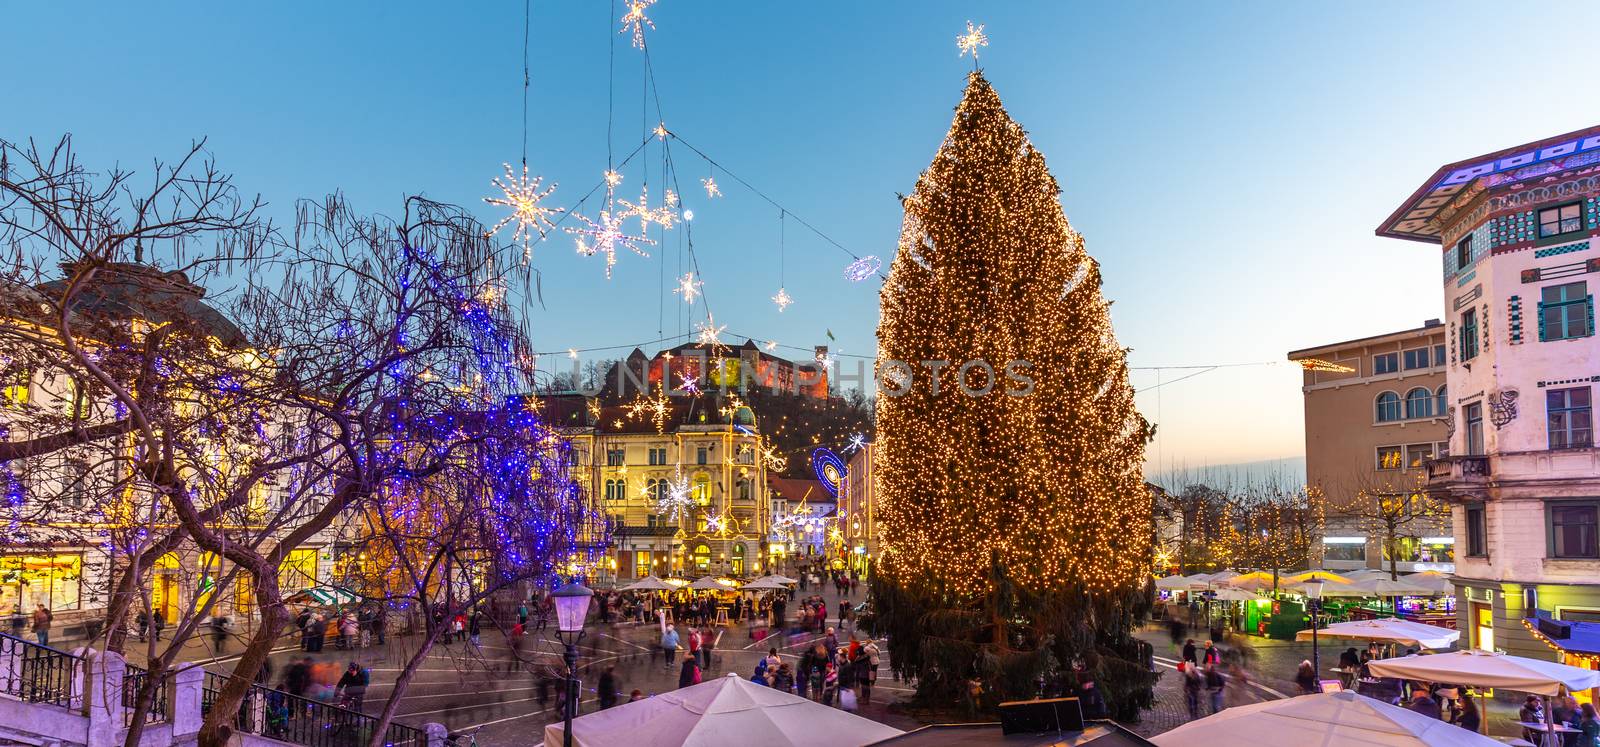 Romantic Ljubljana's city center decorated for Christmas holidays. Preseren's square, Ljubljana, Slovenia, Europe by kasto